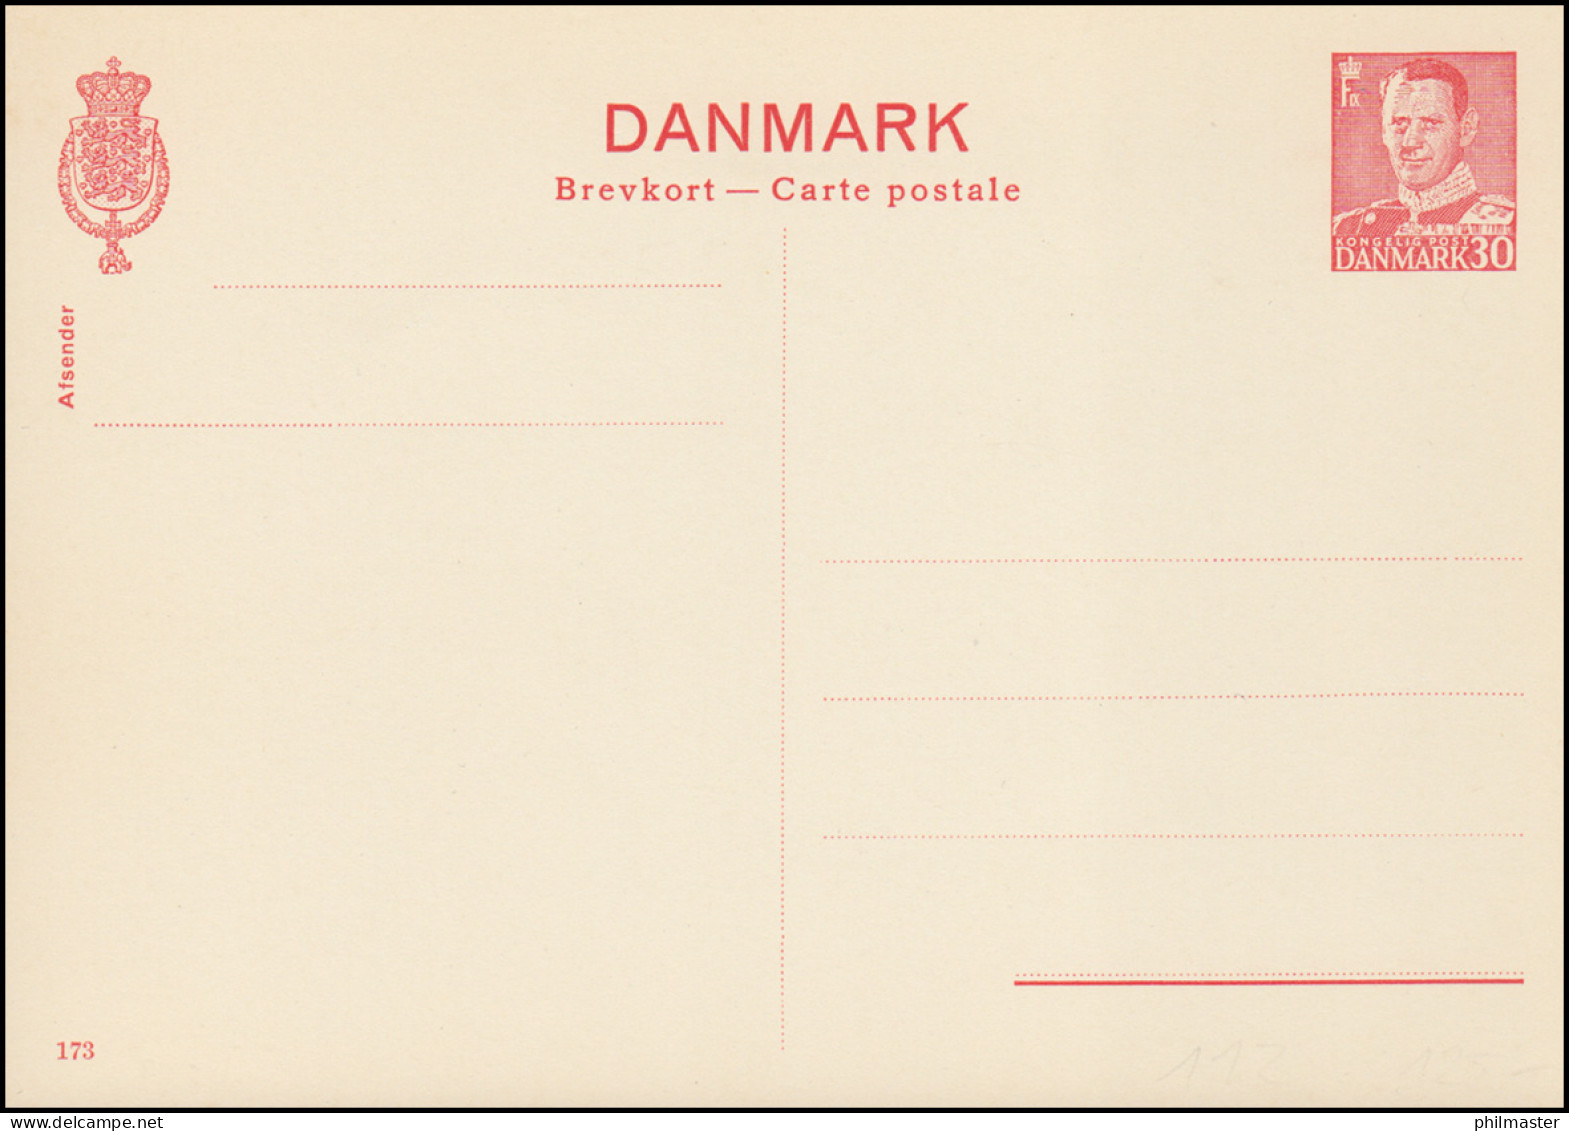 Dänemark Postkarte P 234 Frederik IX. 30 Öre, Kz. 173, ** - Ganzsachen